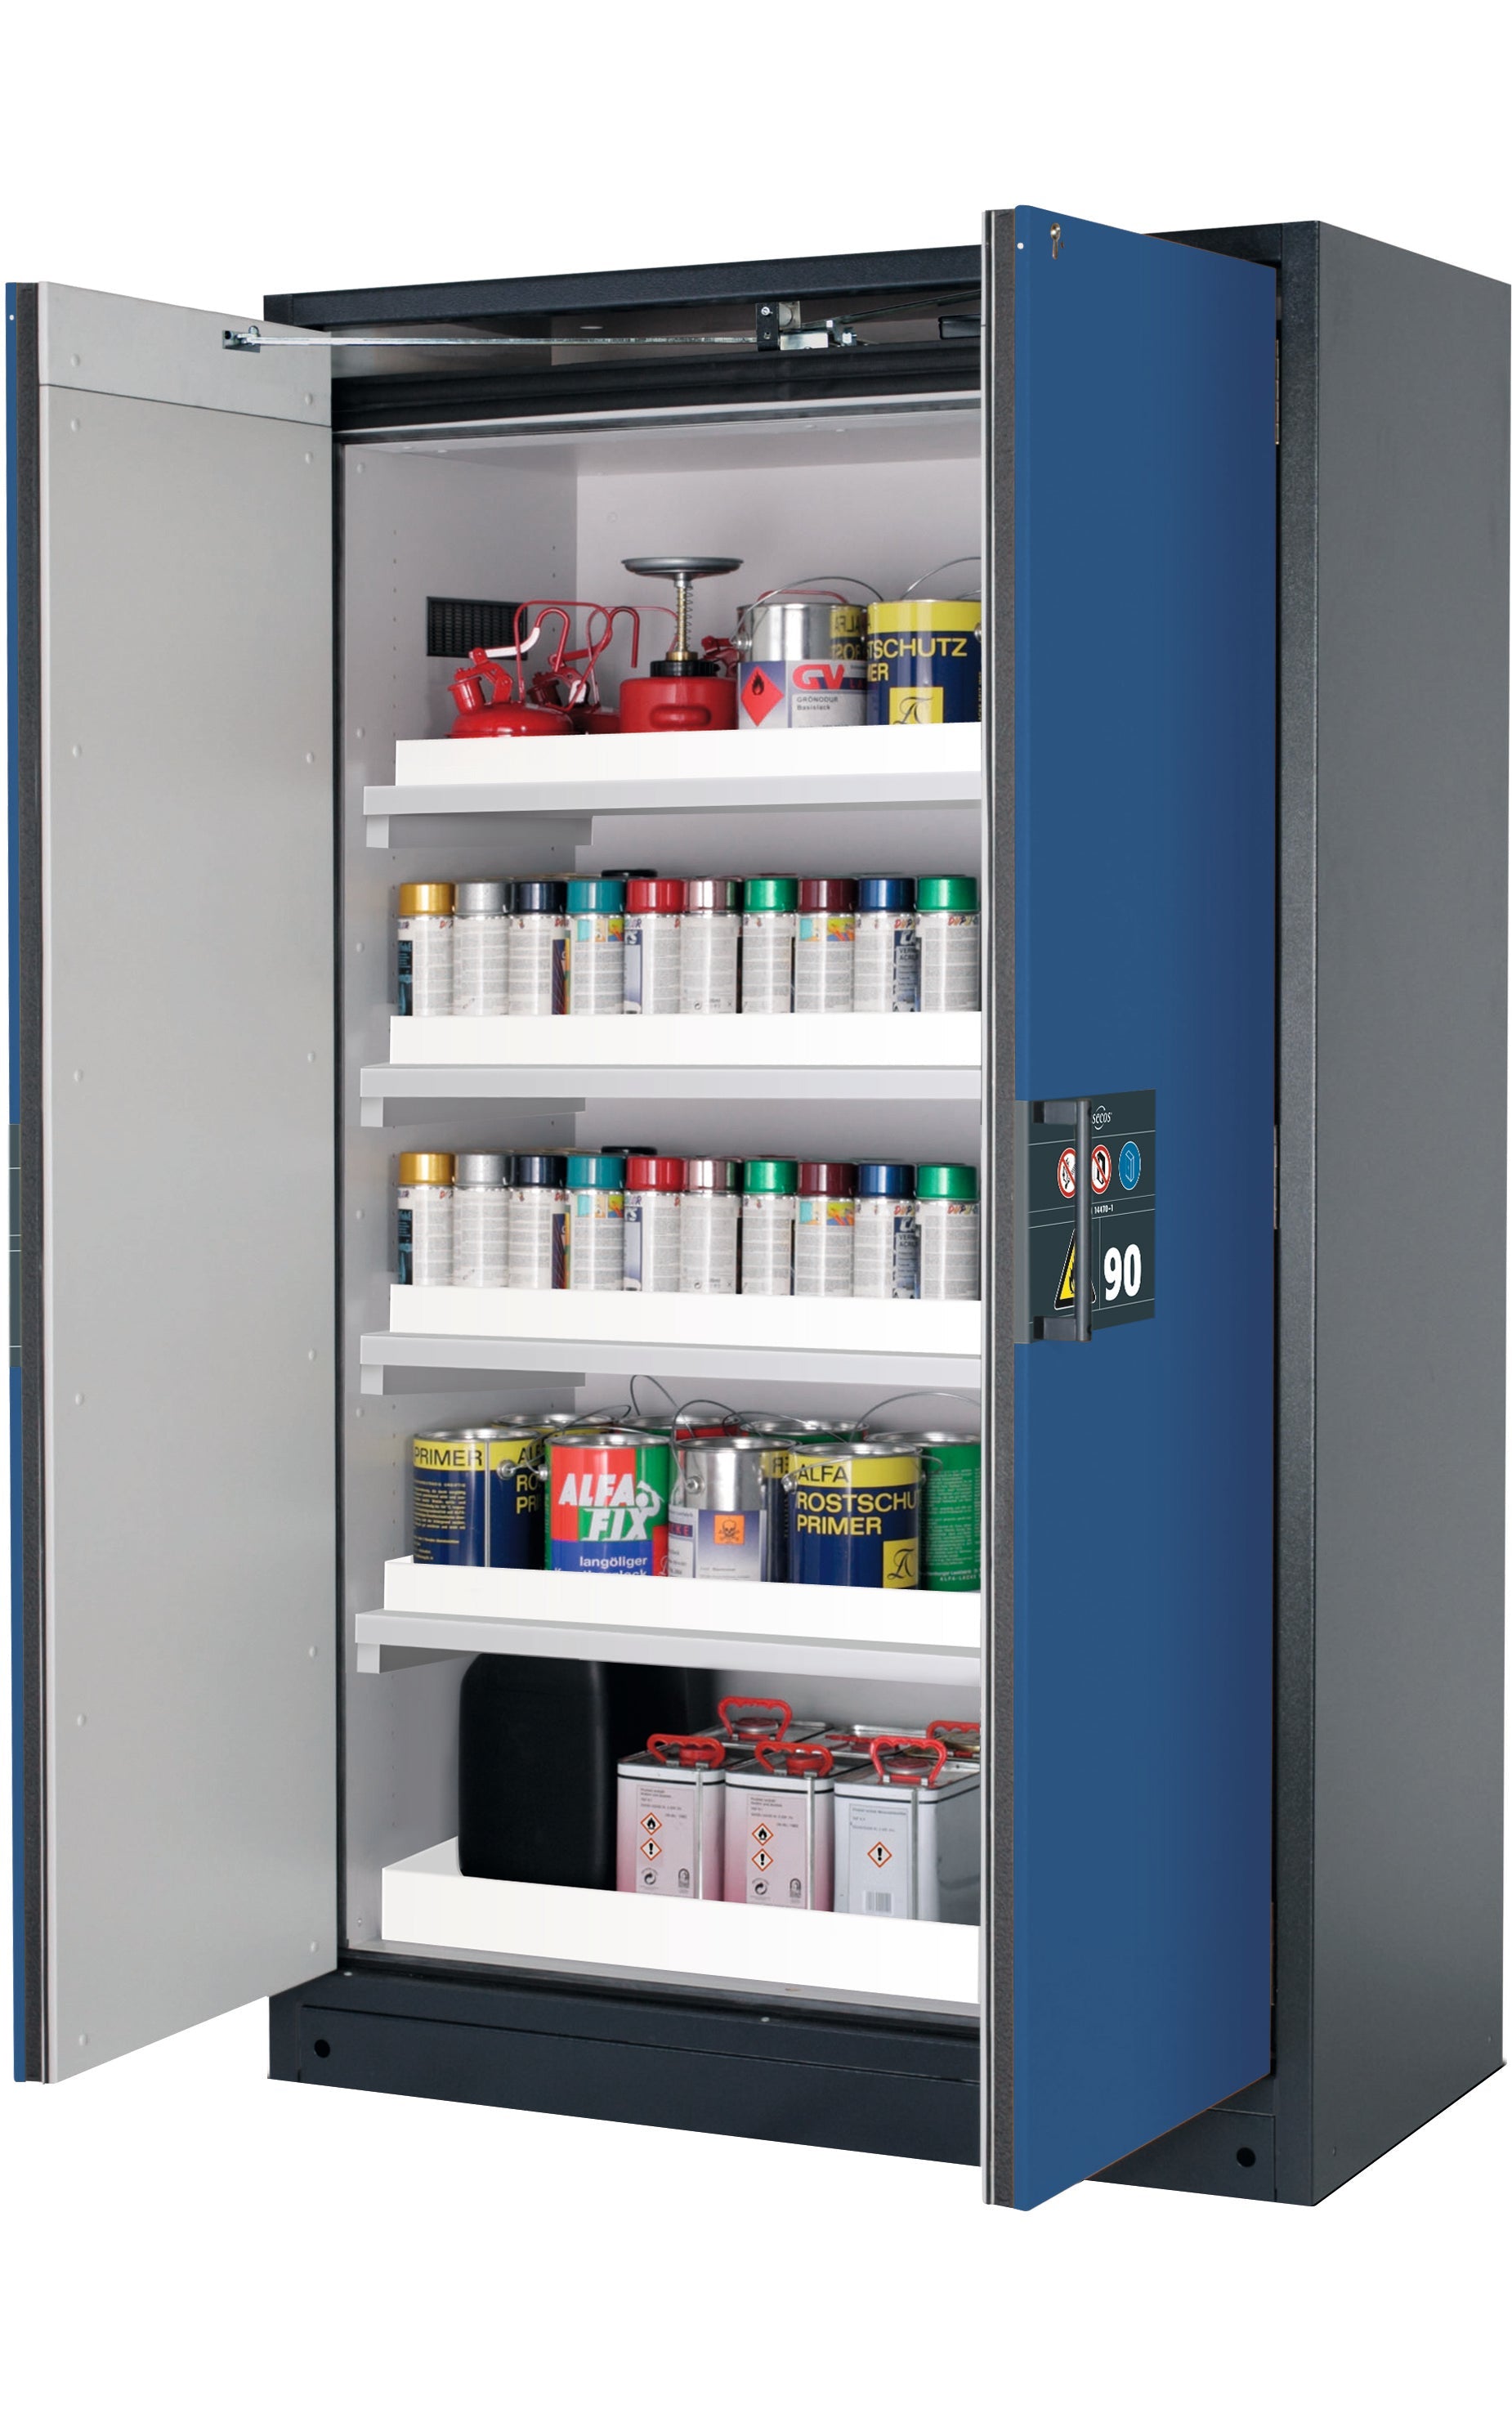 Type 90 safety storage cabinet Q-PEGASUS-90 model Q90.195.120.WDAC in gentian blue RAL 5010 with 4x tray shelf (standard) (polypropylene),